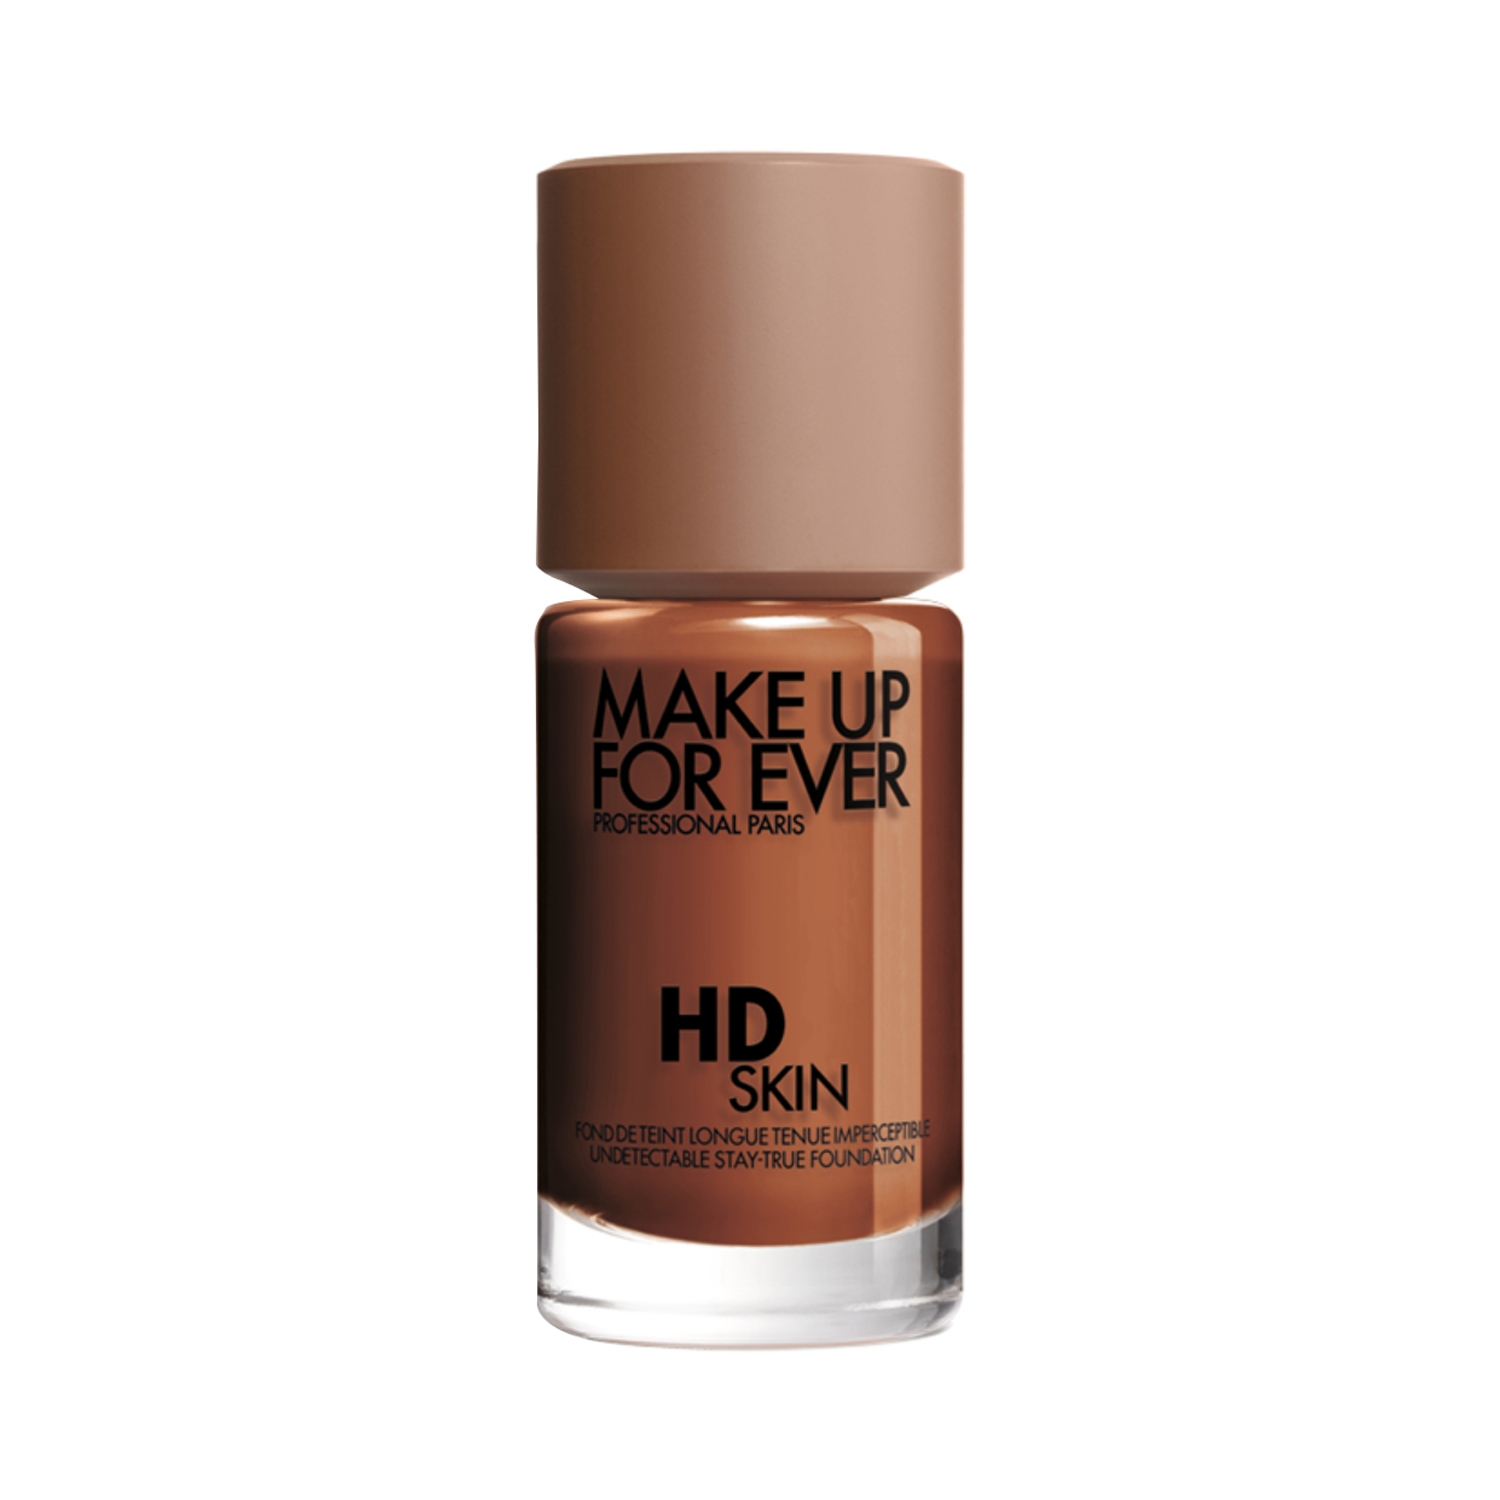 Make Up For Ever | Make Up For Ever Hd Skin Foundation-4N68 (30ml)